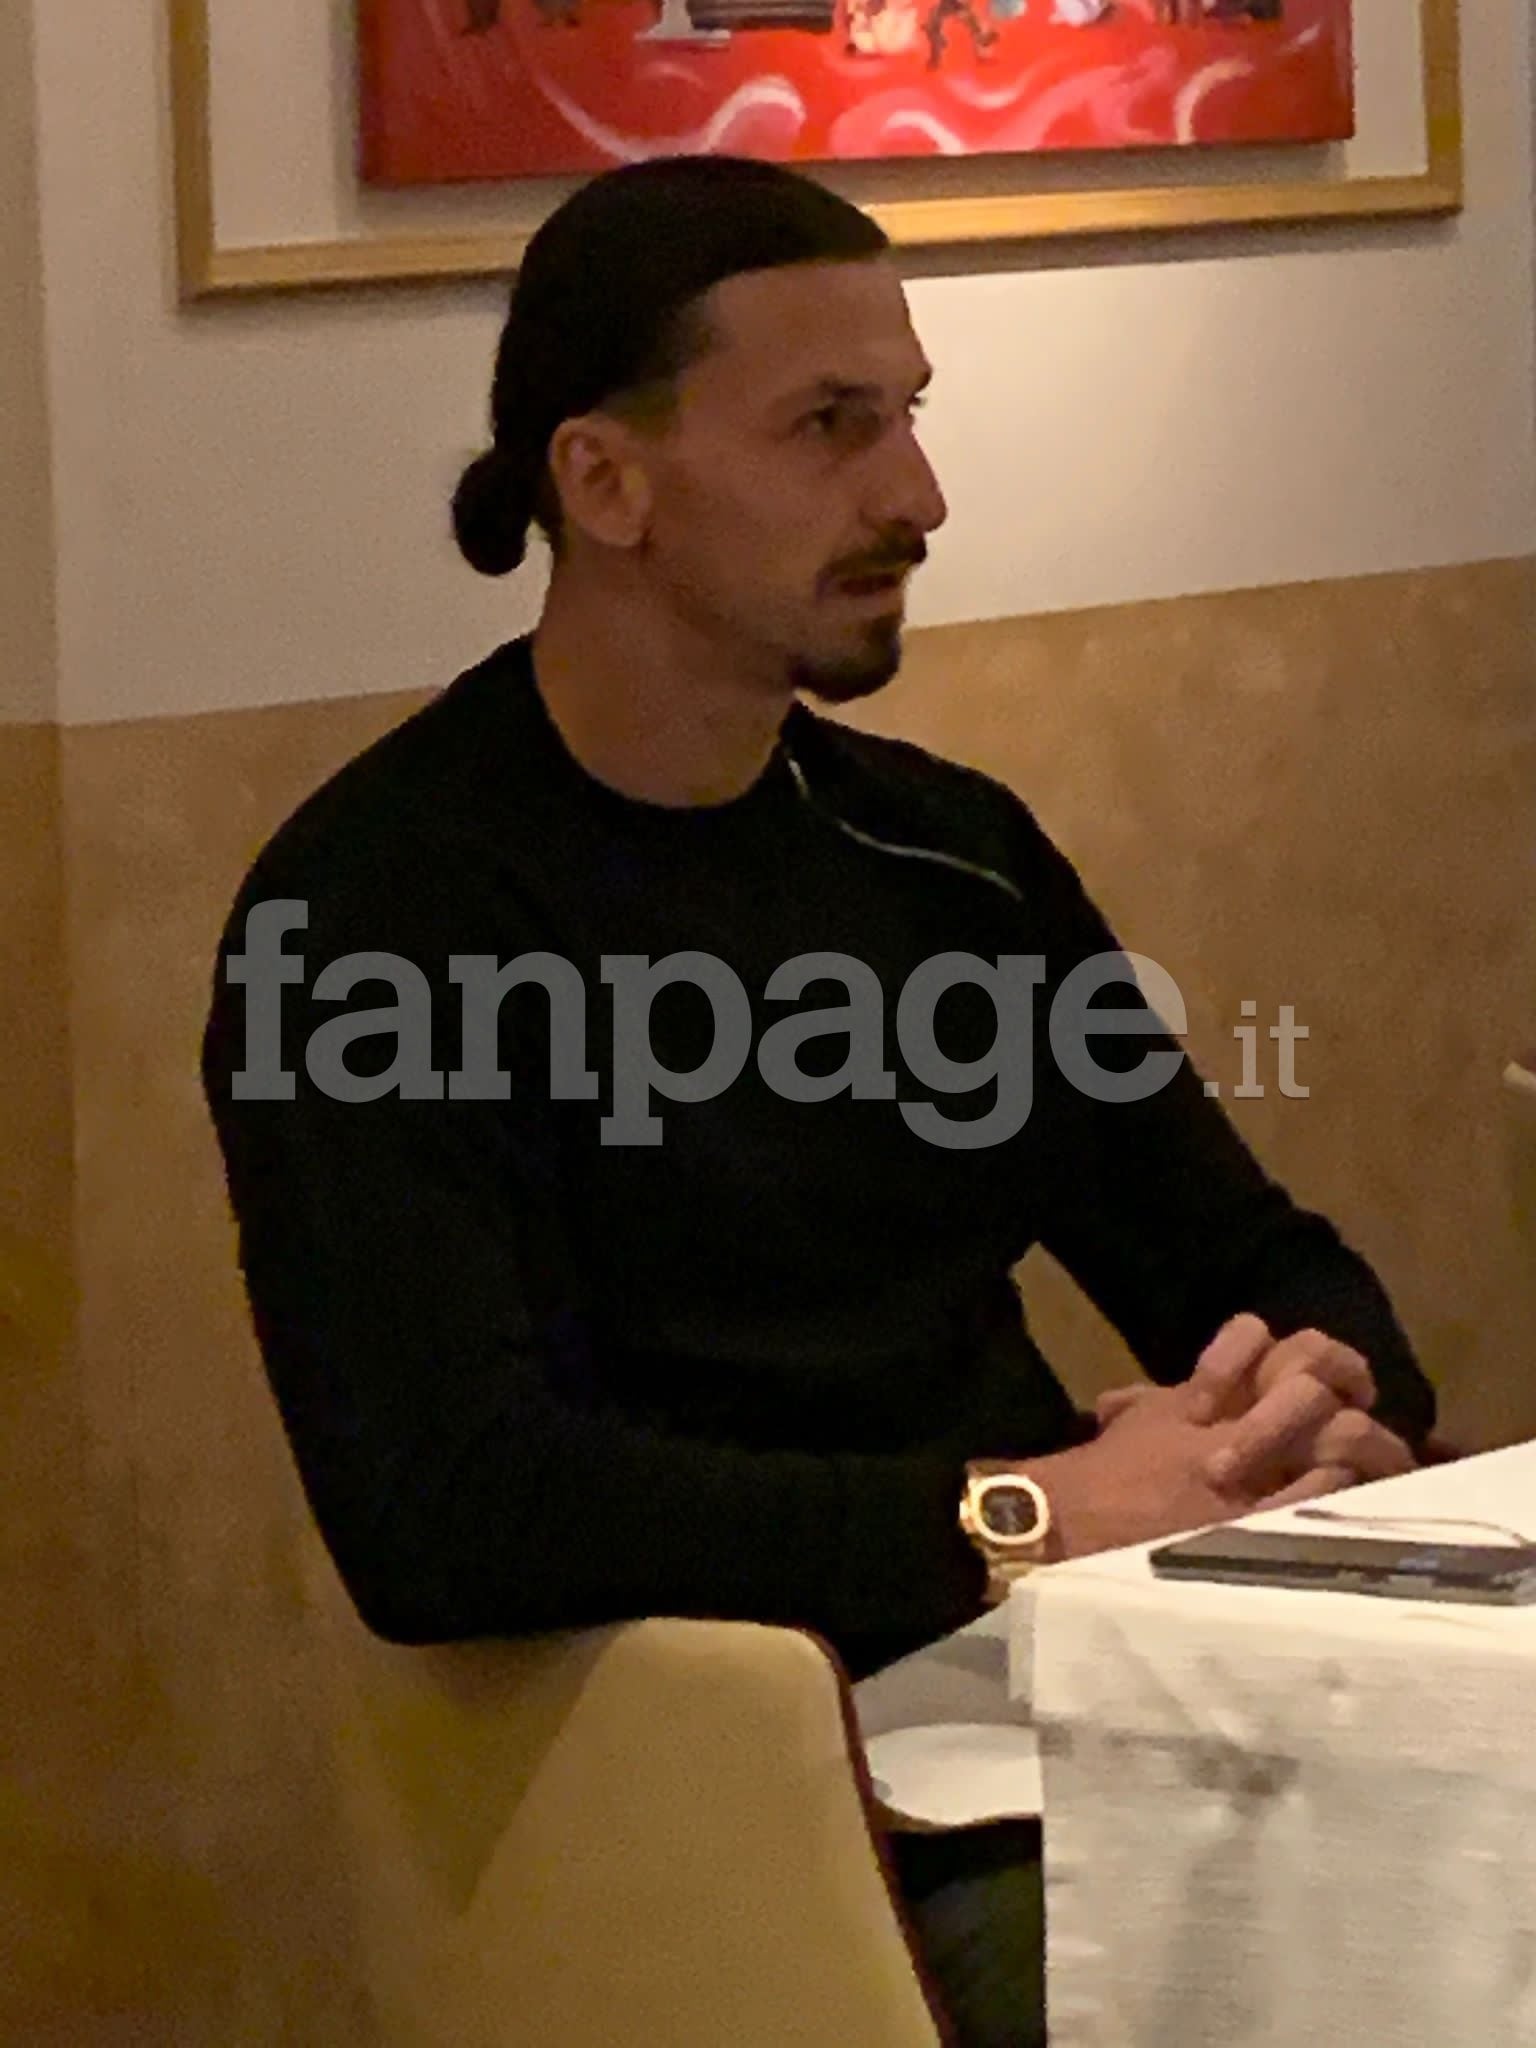 Zlatan Ibrahimovic almorzando en un lugar prohibido (Fanpage.it)